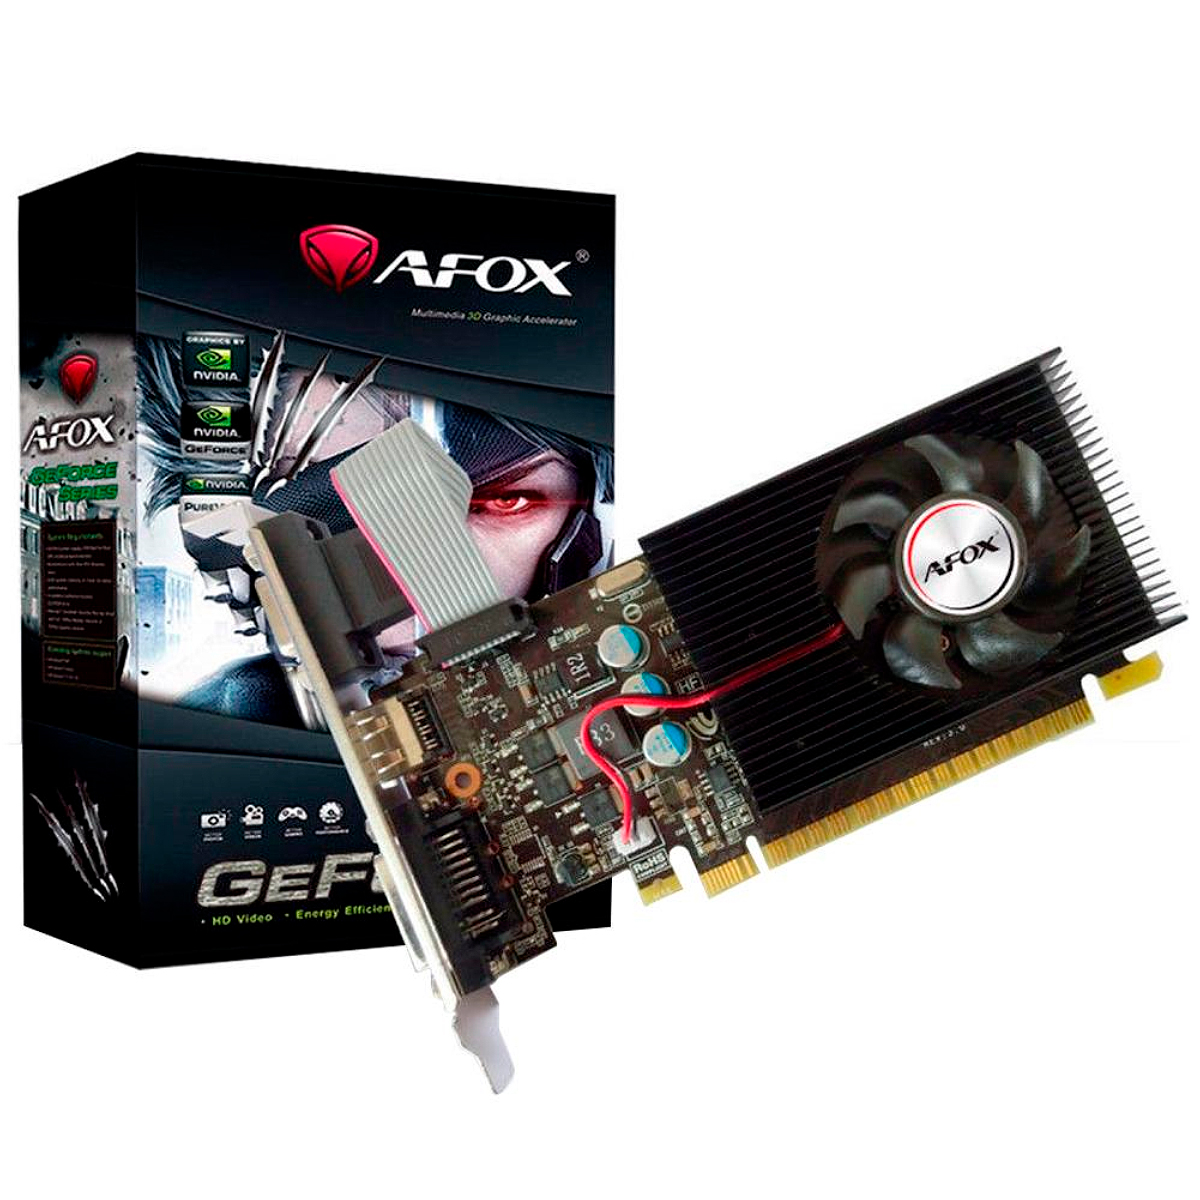 GeForce GT 730 4GB DDR3 128bits - Low Profile - AFOX AF730-4096D3L6